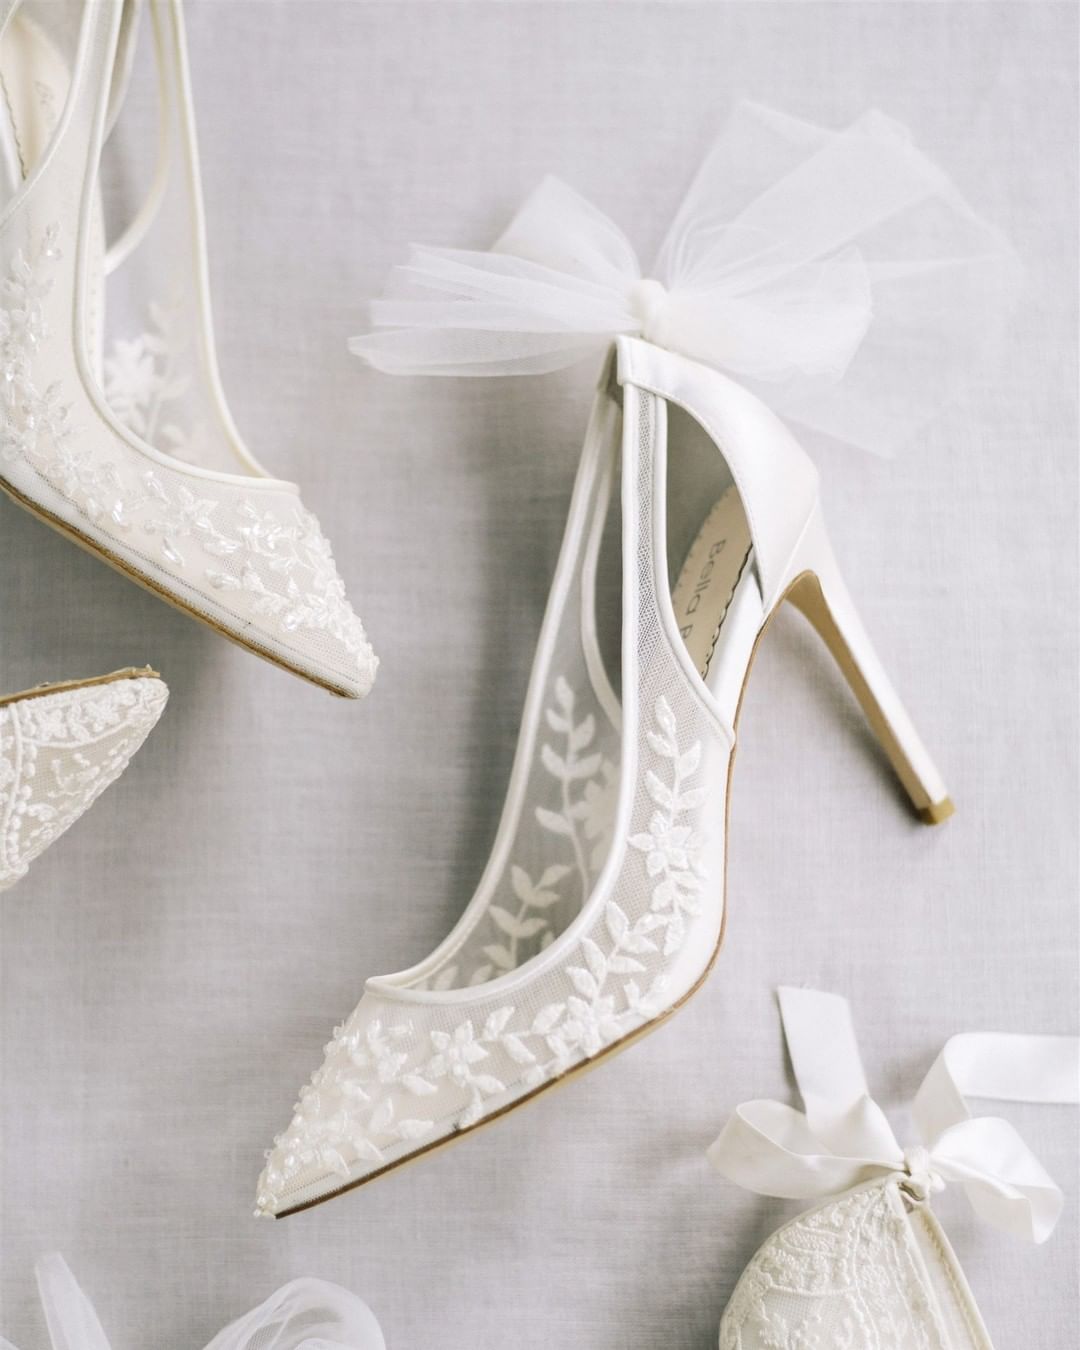 lace wedding shoes white